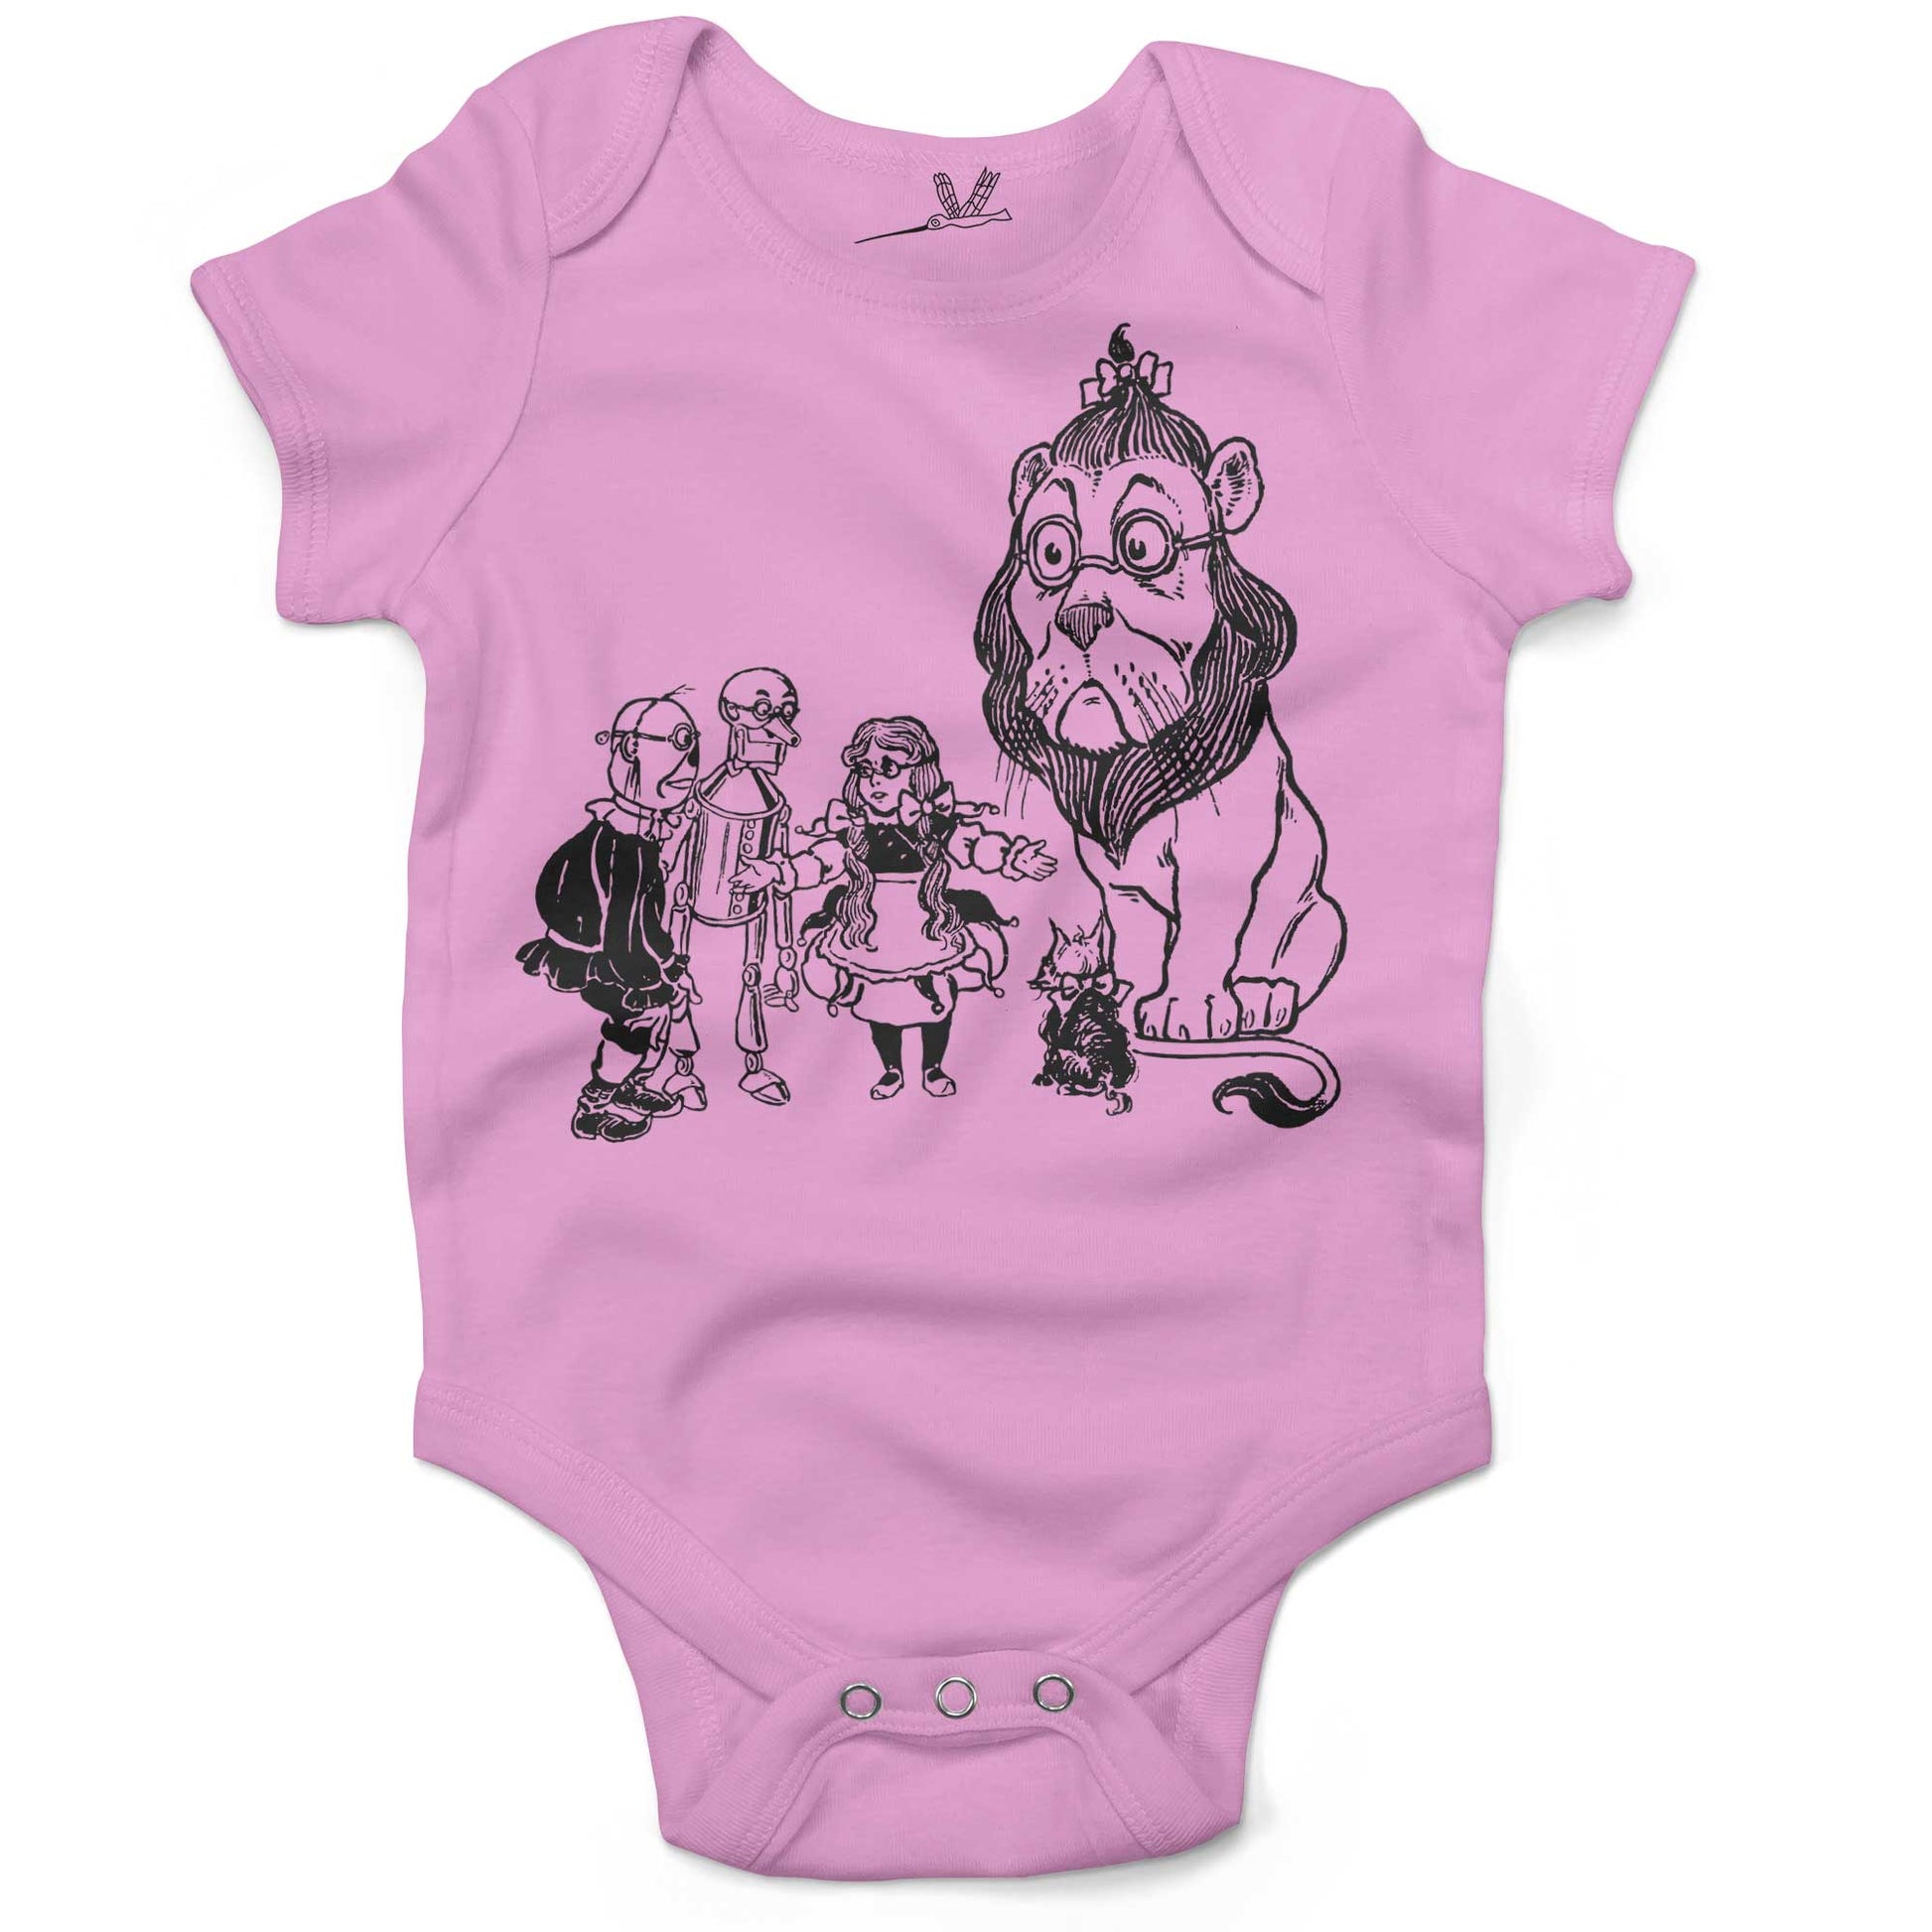 Wizard Of Oz Infant Bodysuit-Organic Pink-3-6 months